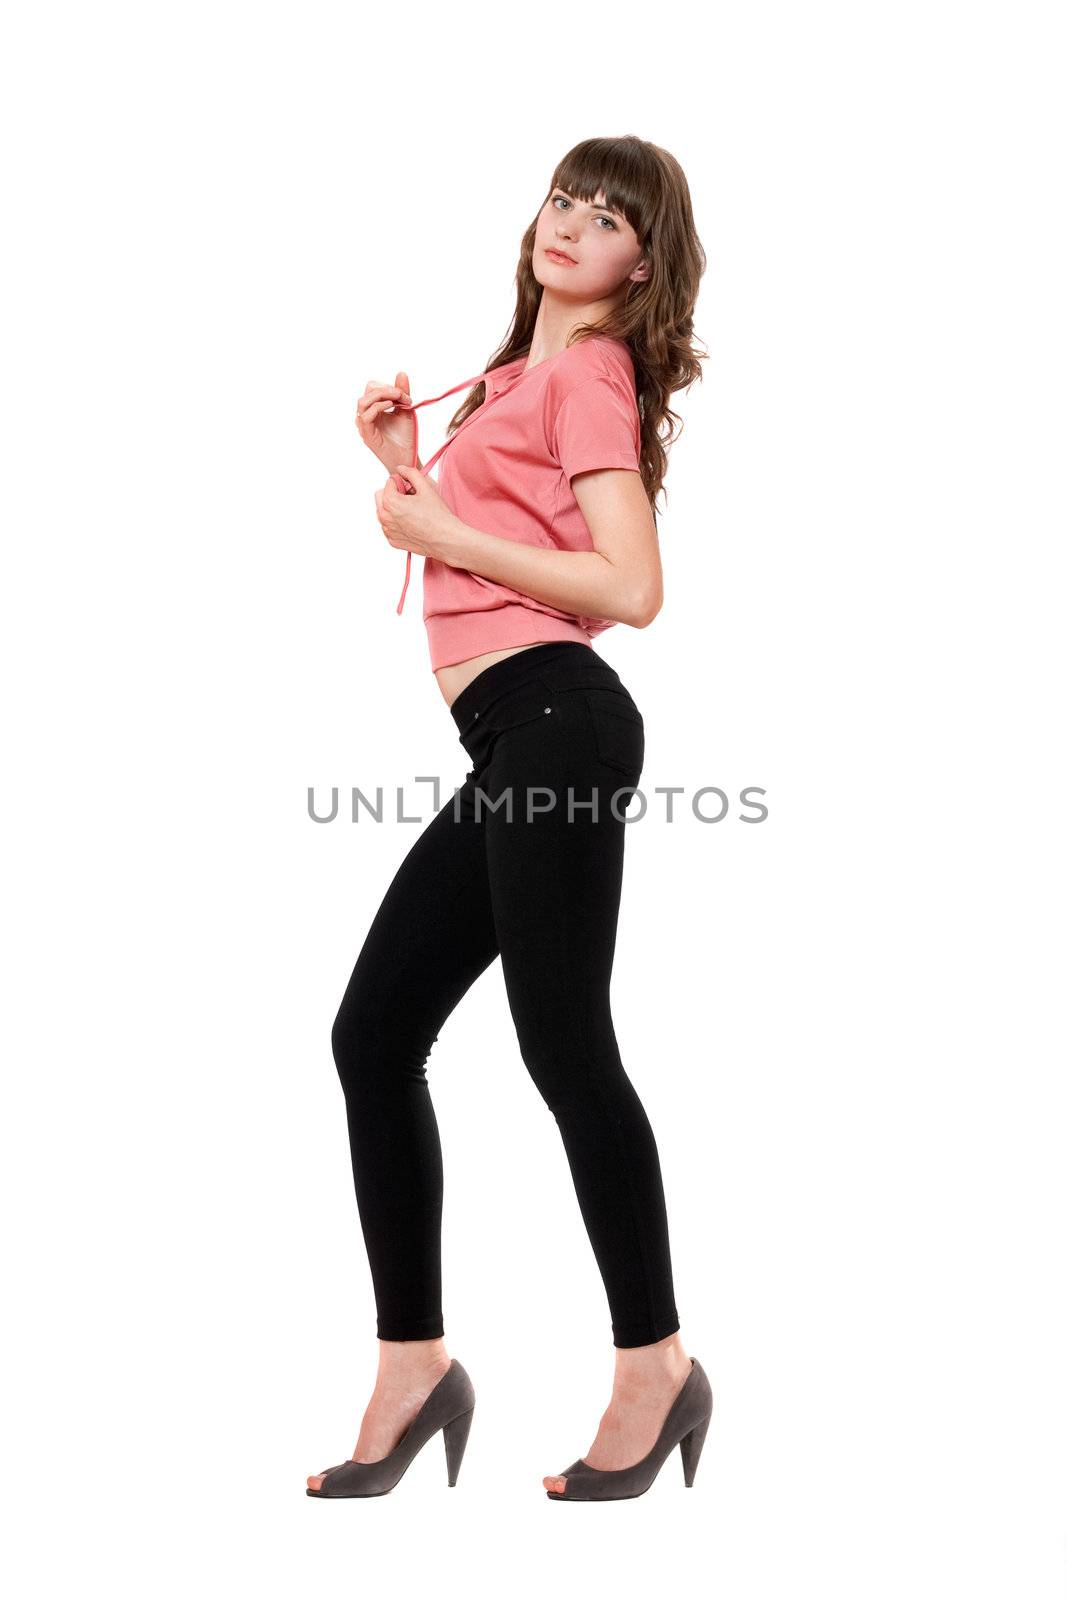 Young beautiful woman in a black leggings